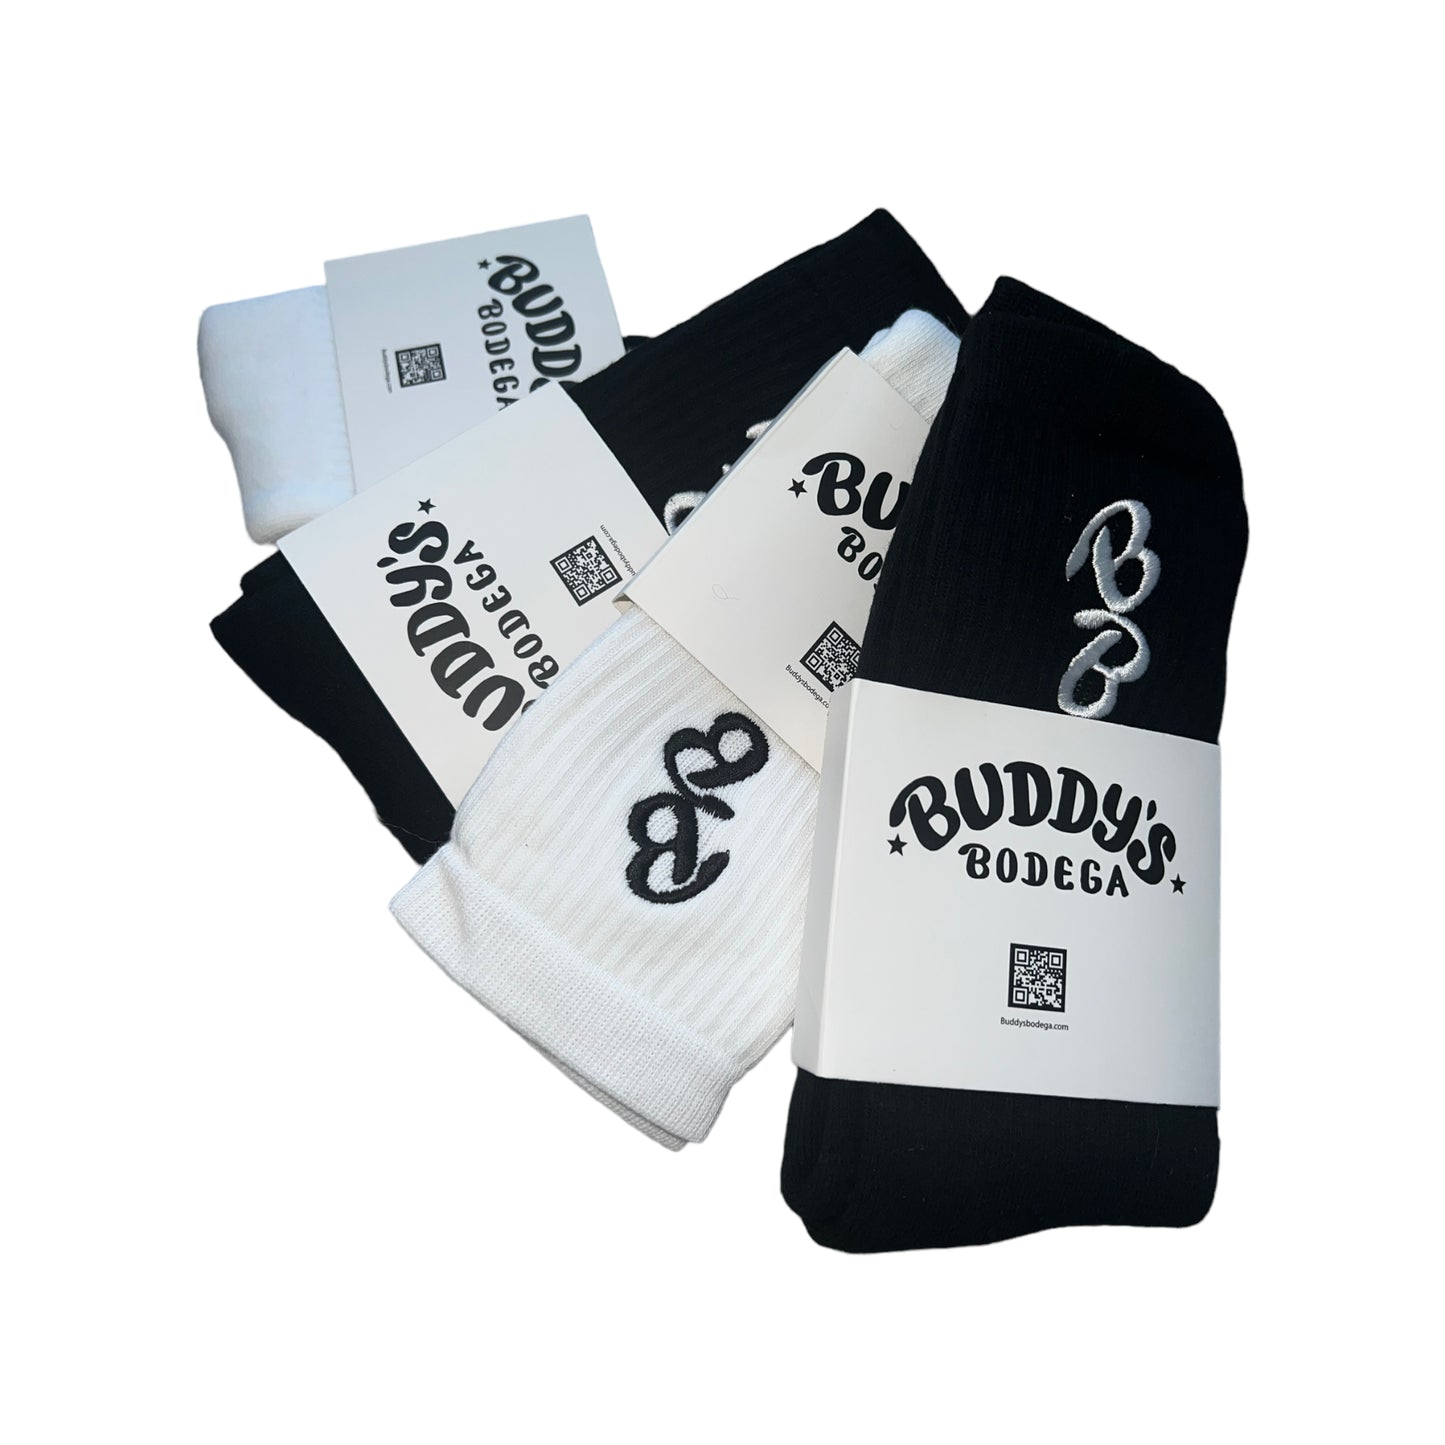 Buddy’s Original Socks